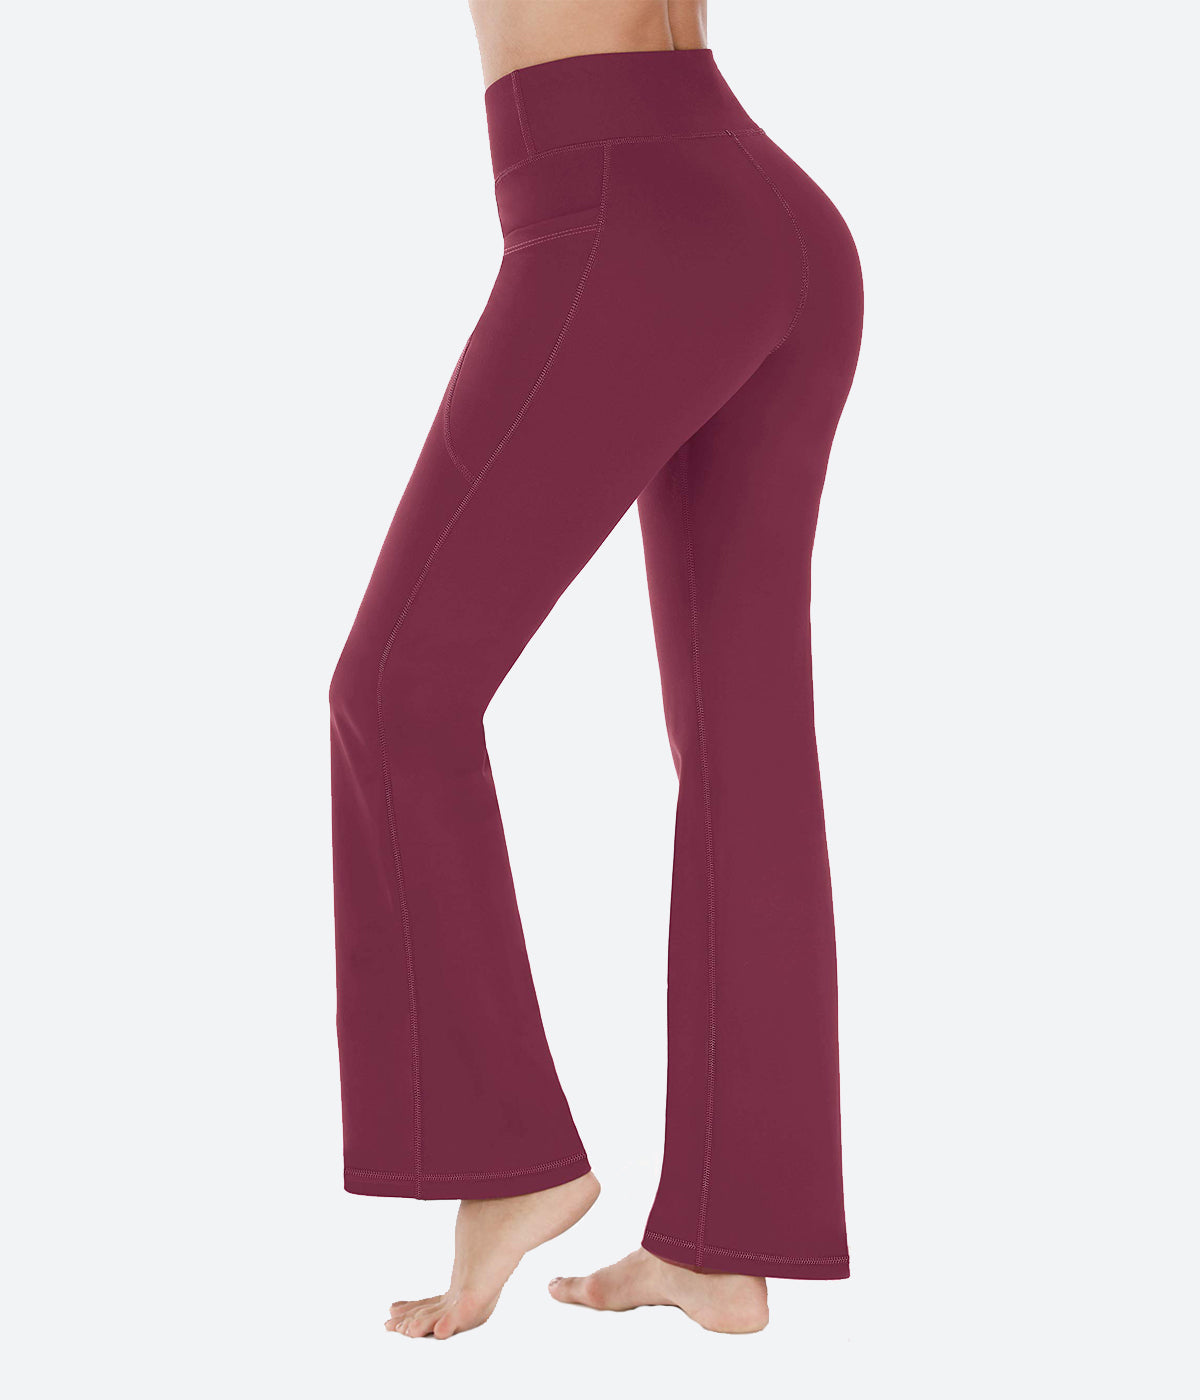 oelaio Women's Yoga Pants Bootcut Yoga Pants with Pockets for